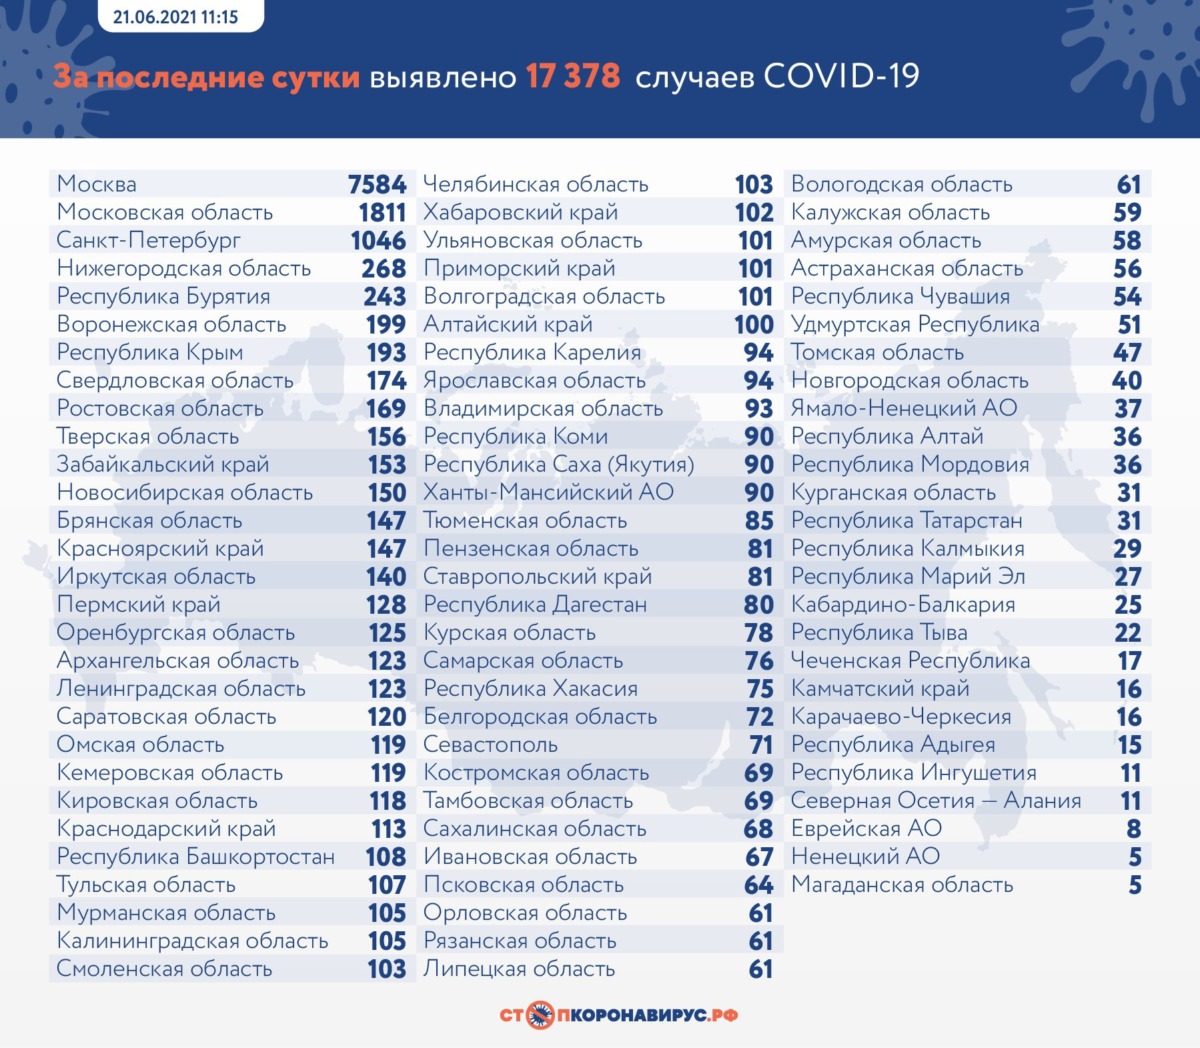 Оперативная статистика коронавируса в России на 21 июня